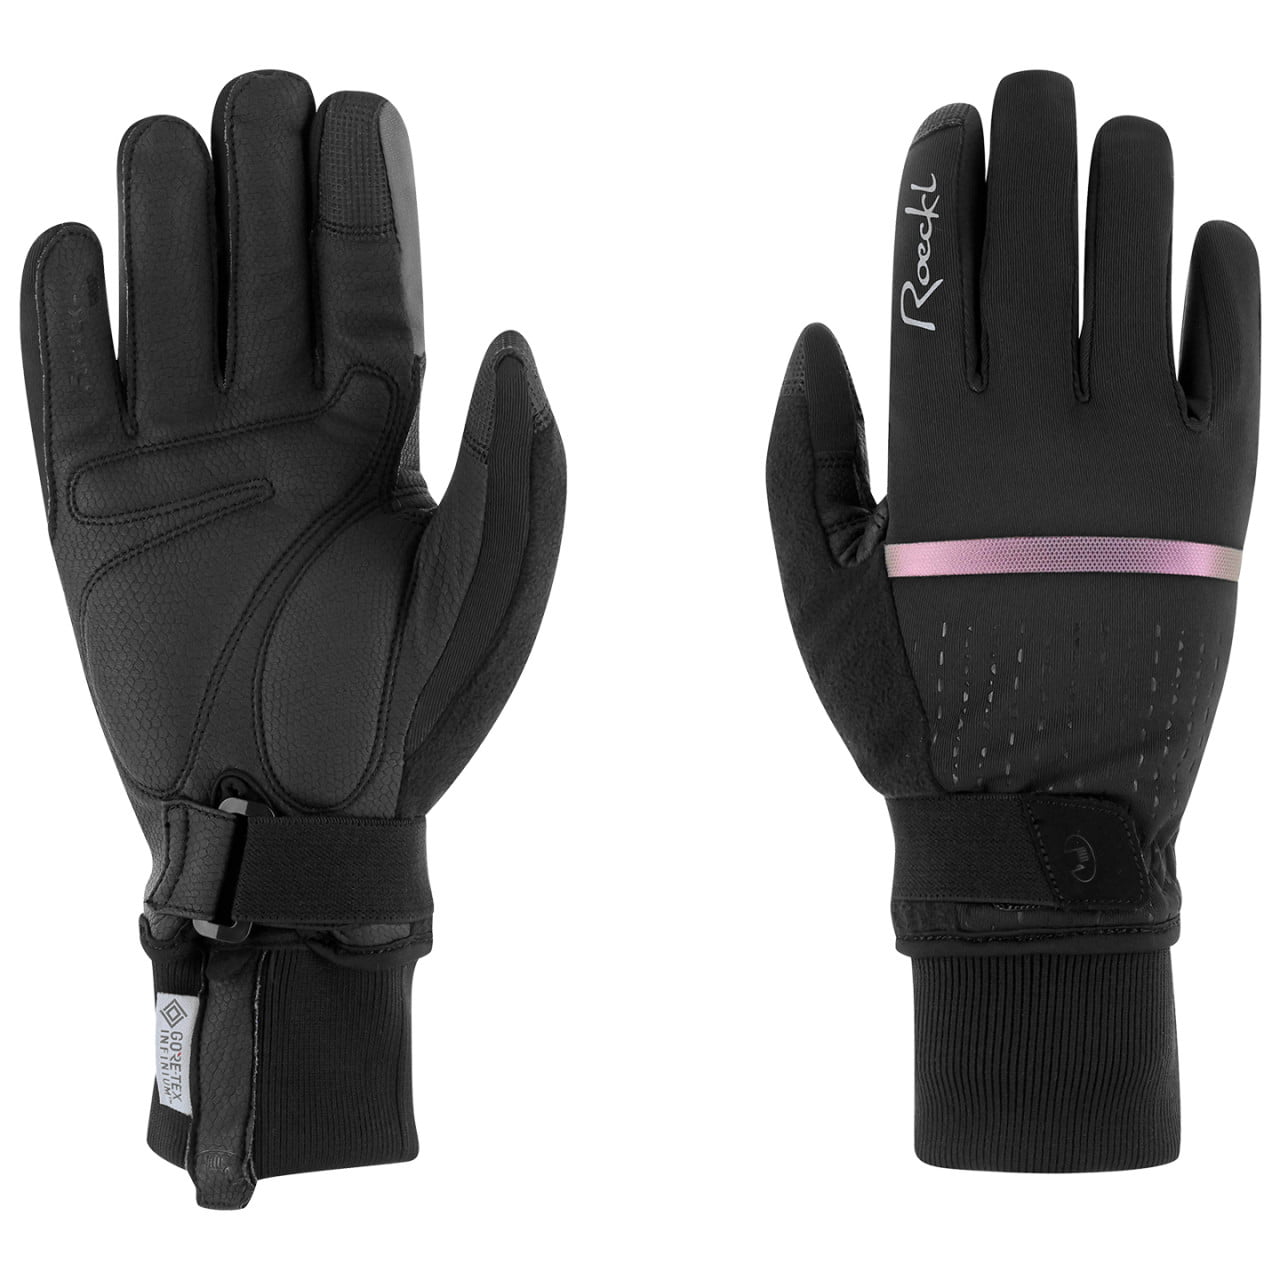 Watou Women's Winter Gloves